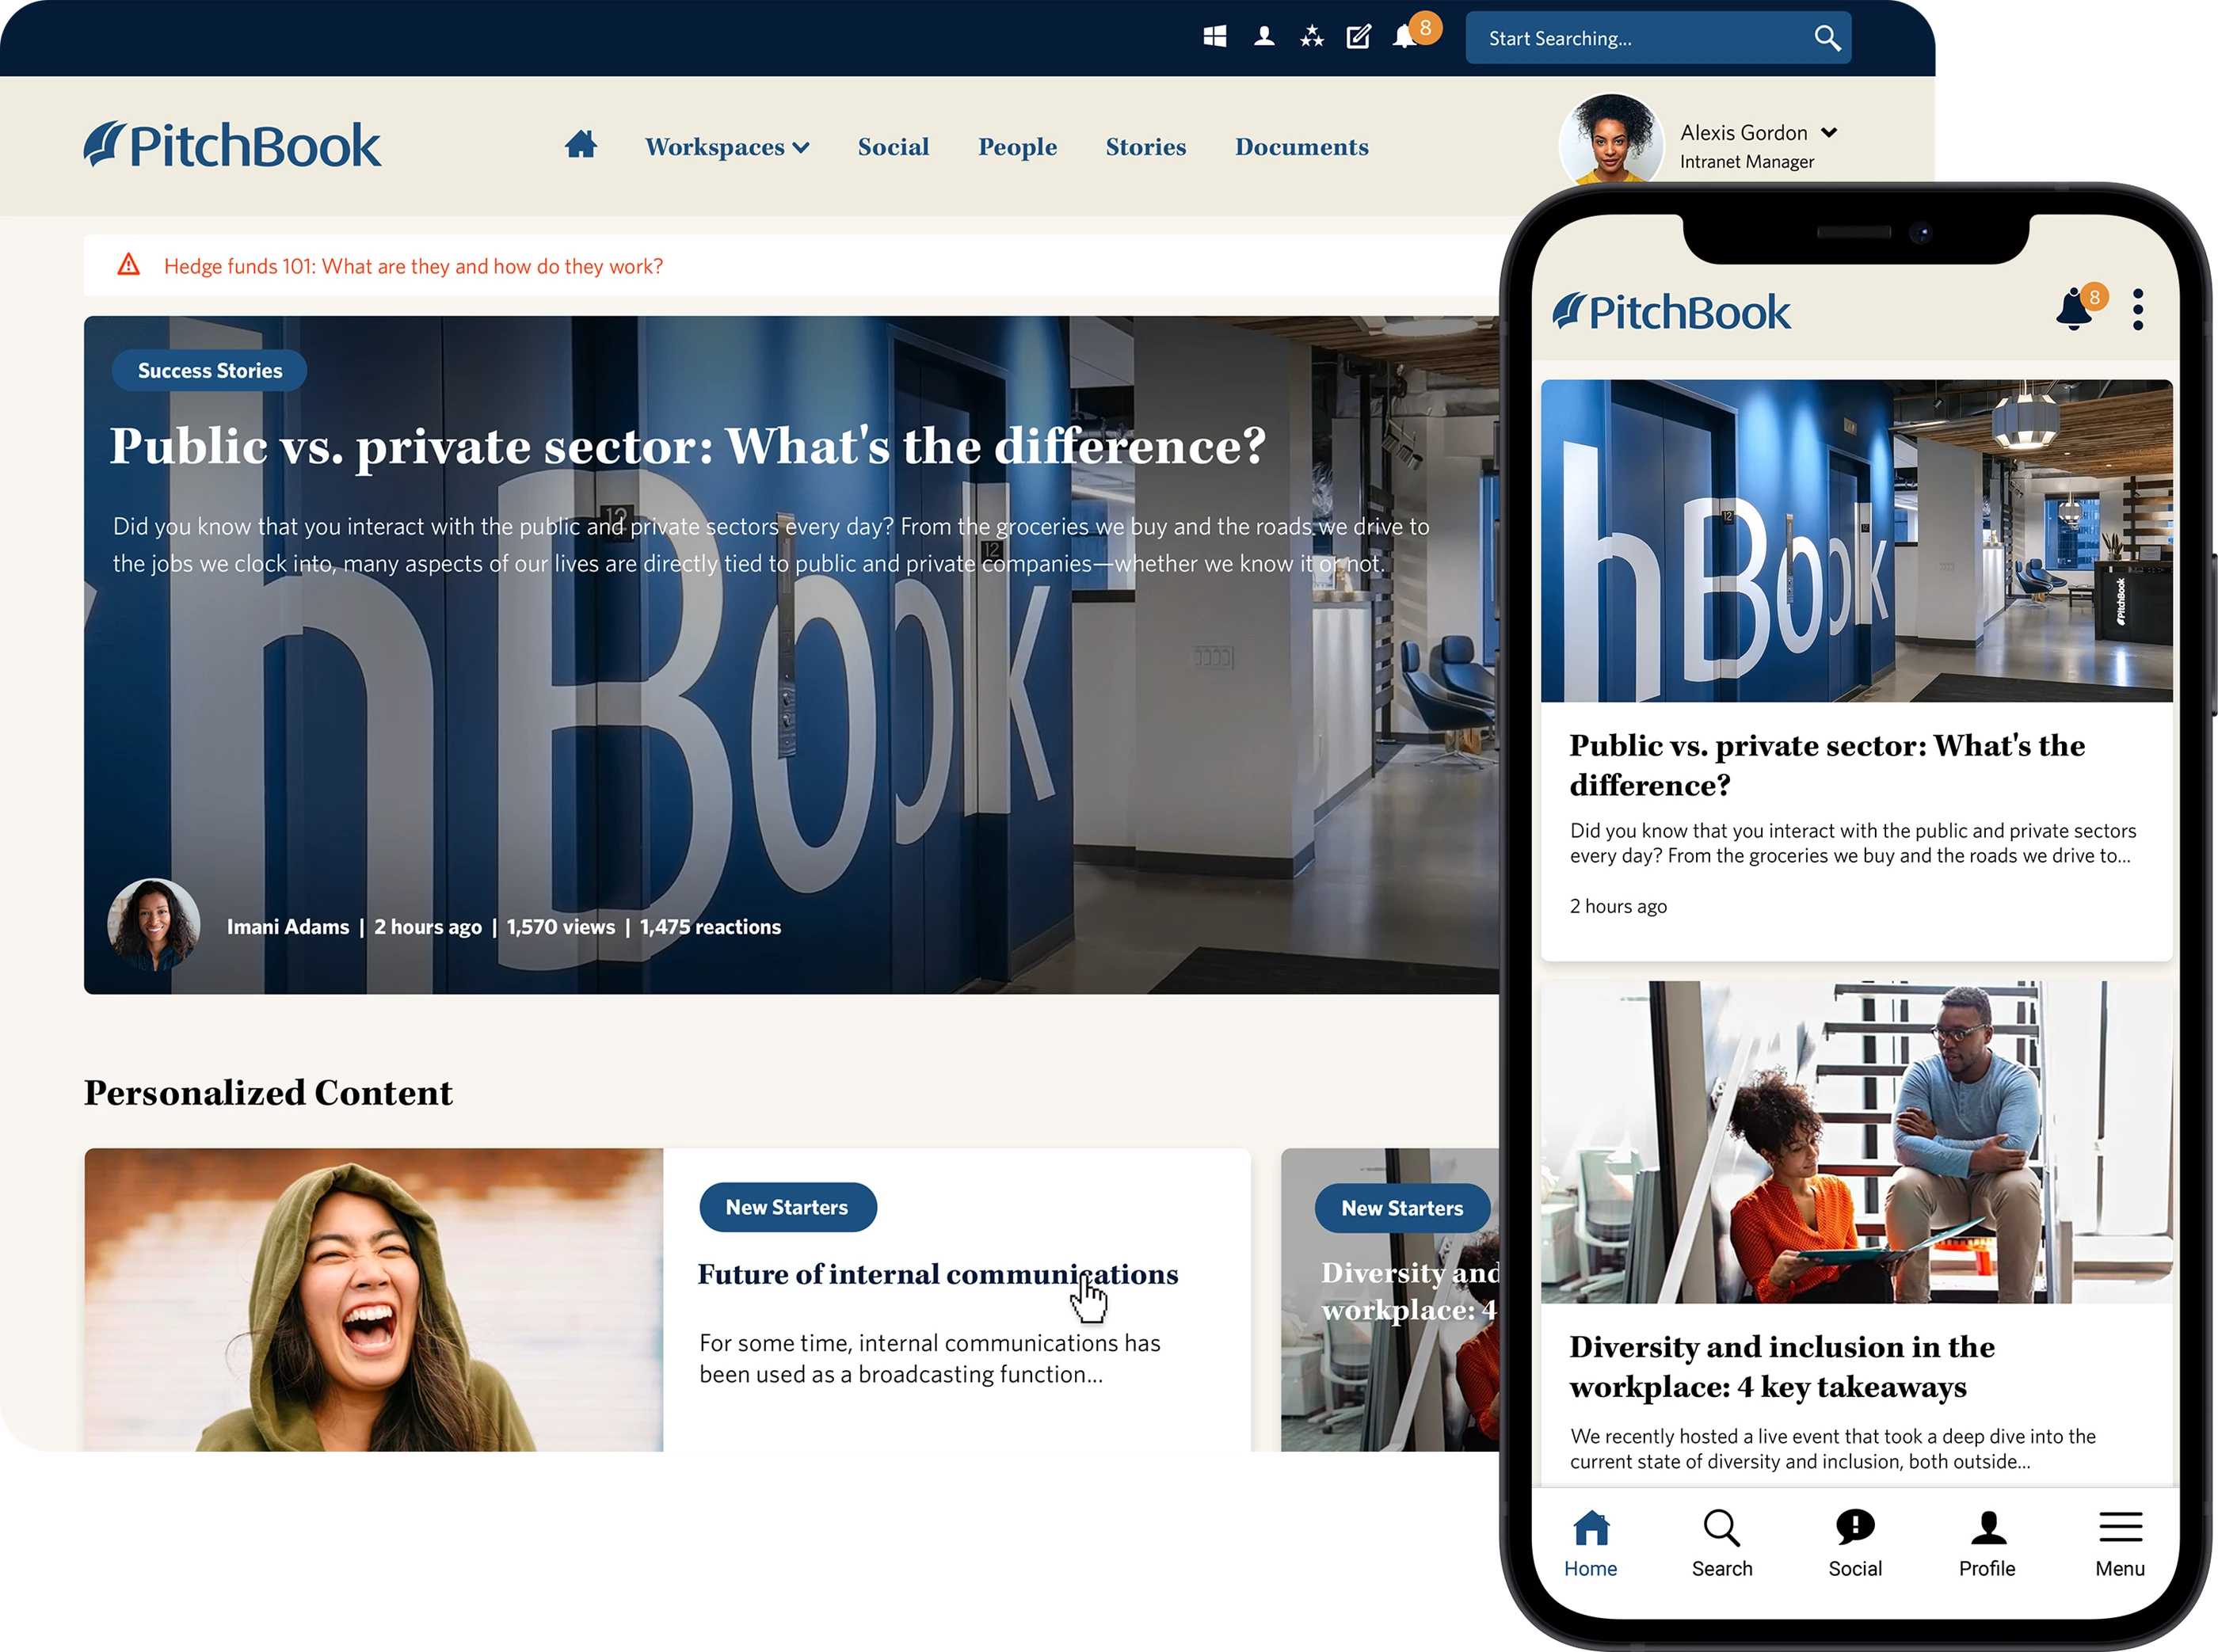 PitchBook Intranet Employee Experience Platform